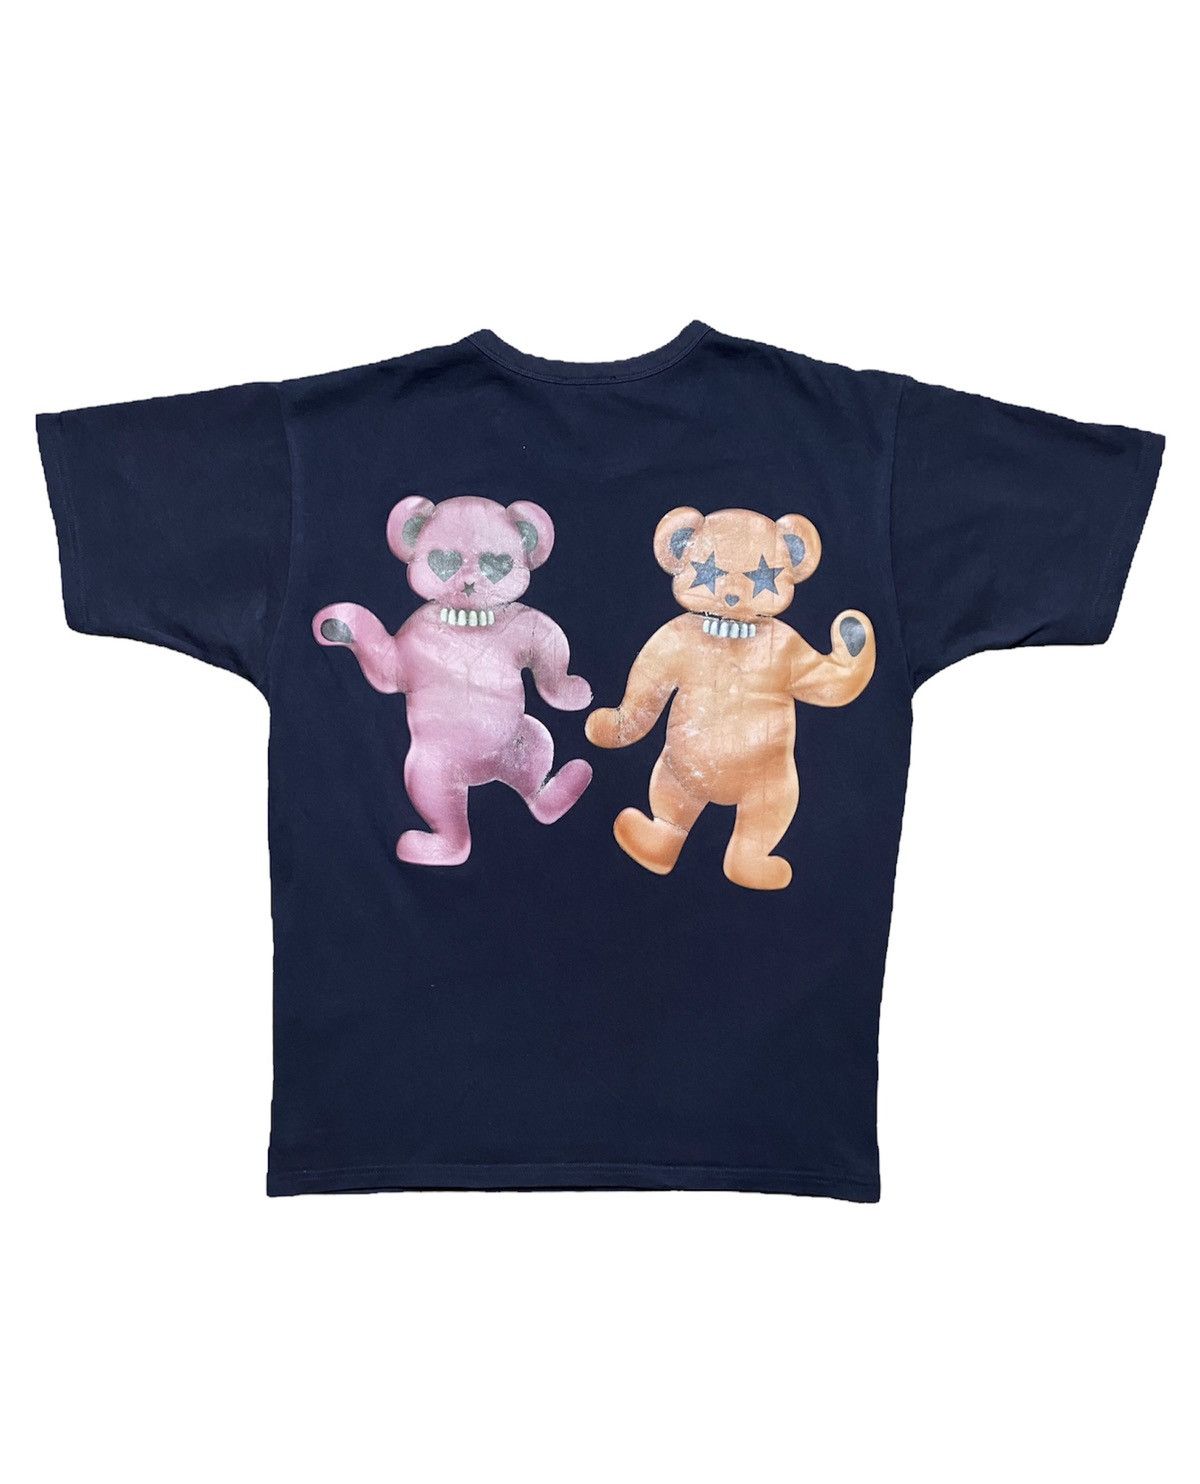 Acne Studios Acne Studios Niagara Bear Emoji T-shirt | Grailed